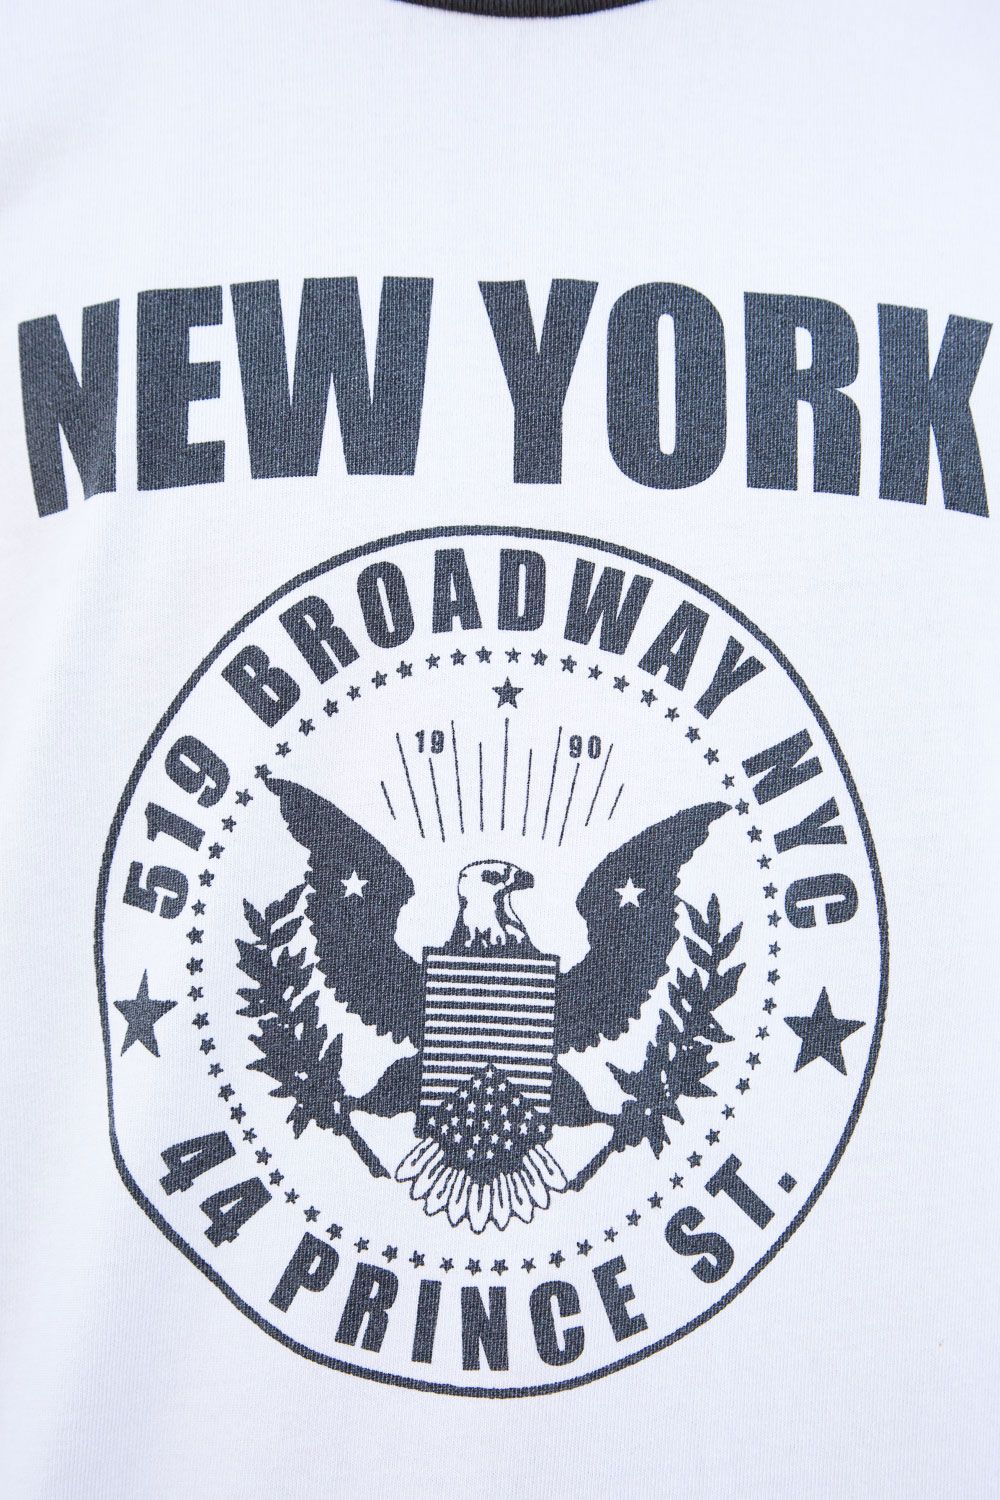 519 Broadway NYC T-Shirt – Yellow Rat Bastard